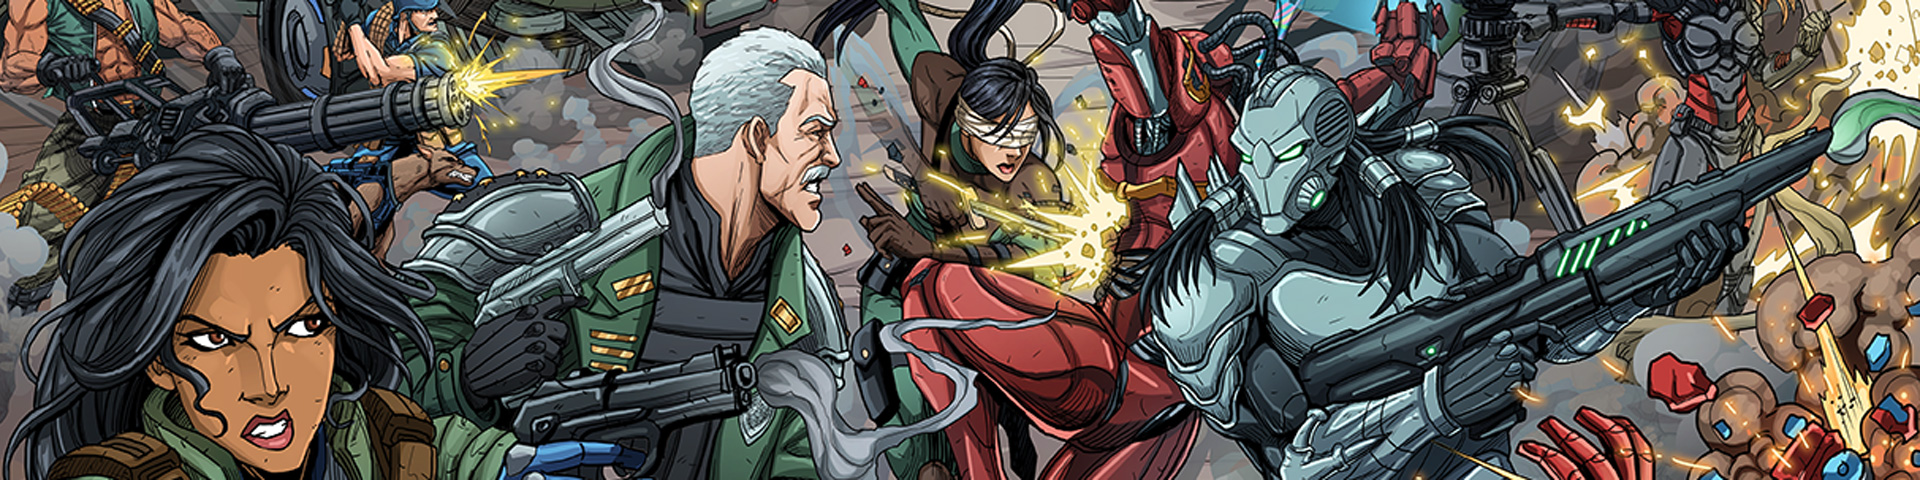 Heroes and villains fight on a chaotic, G.I. Joe-like battlefield.